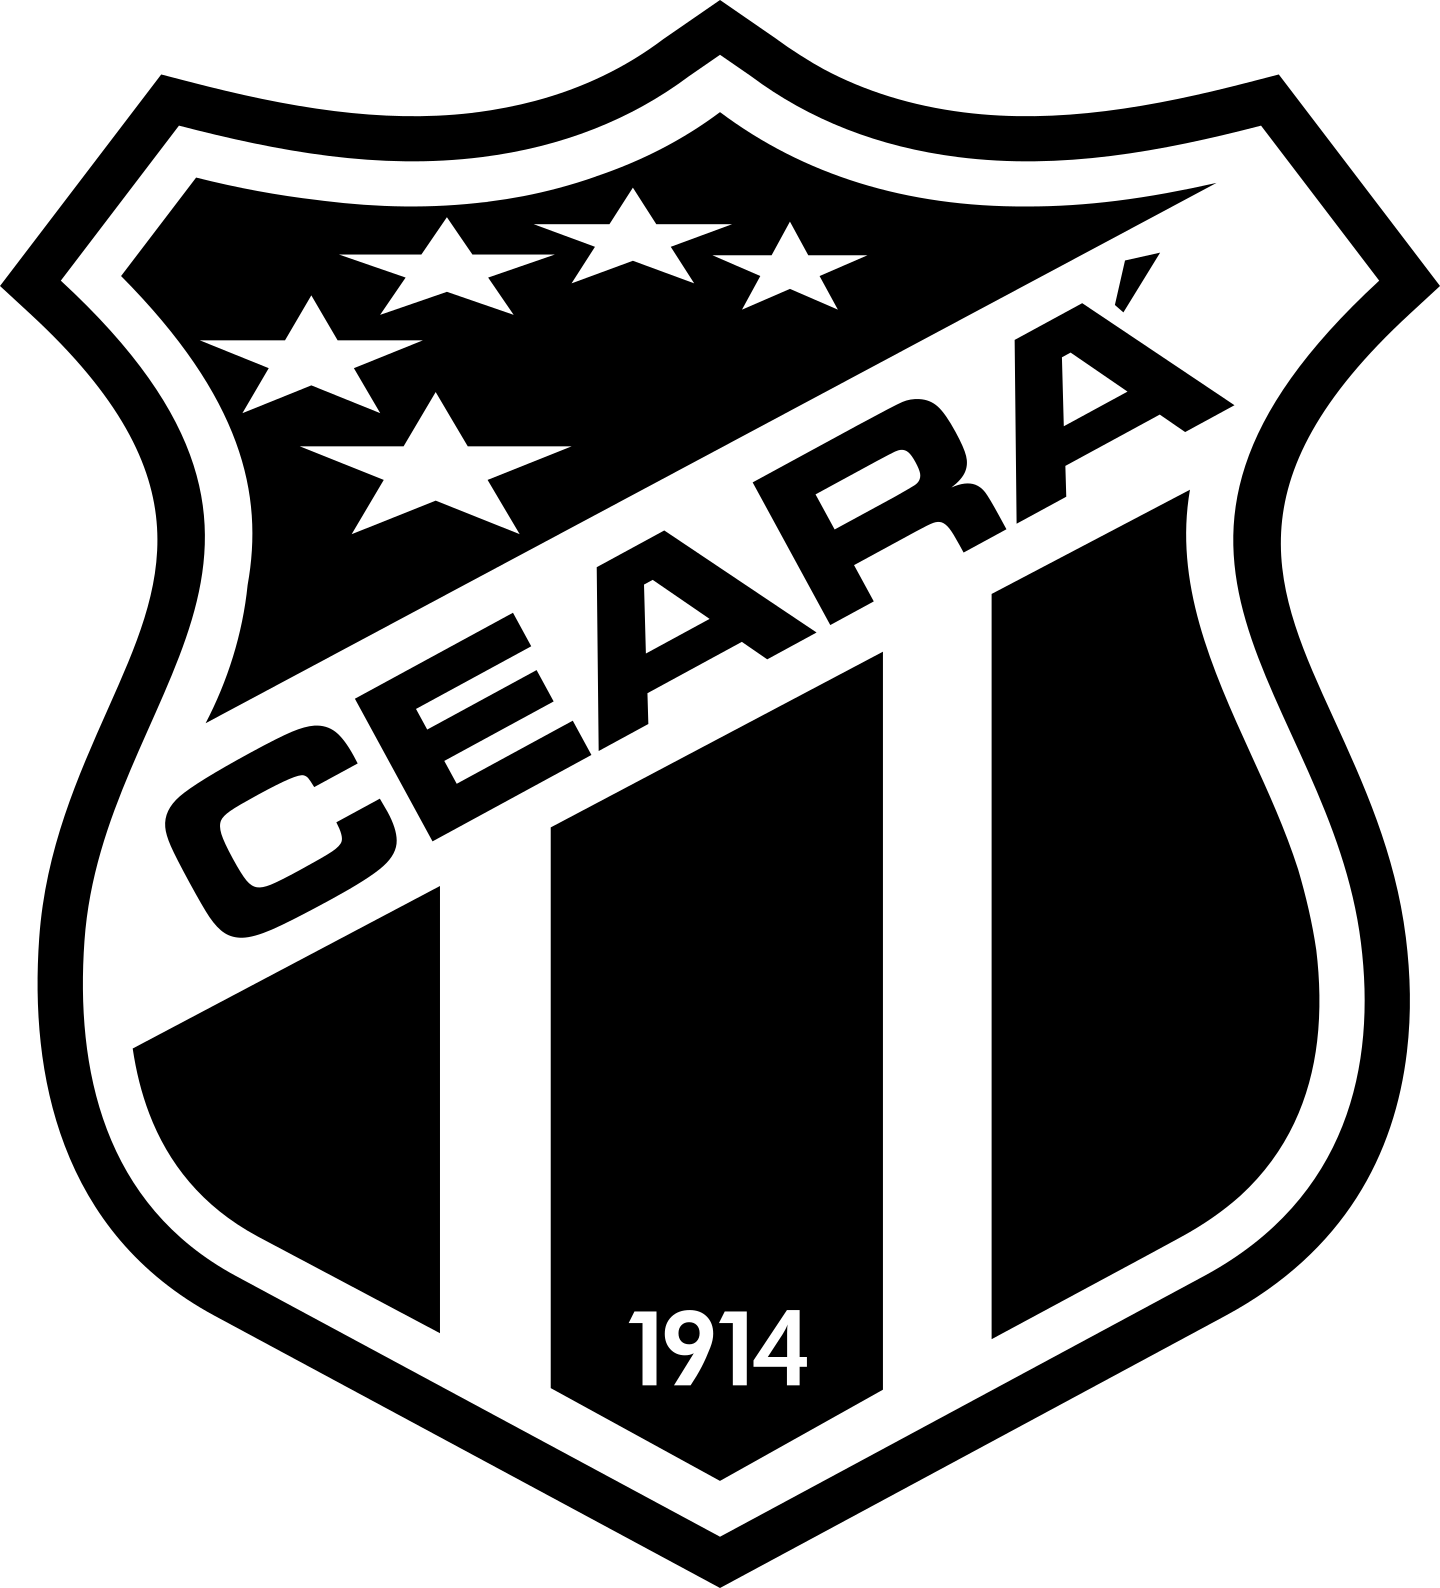 ceara sc logo 2 - Ceará Sporting Club Logo